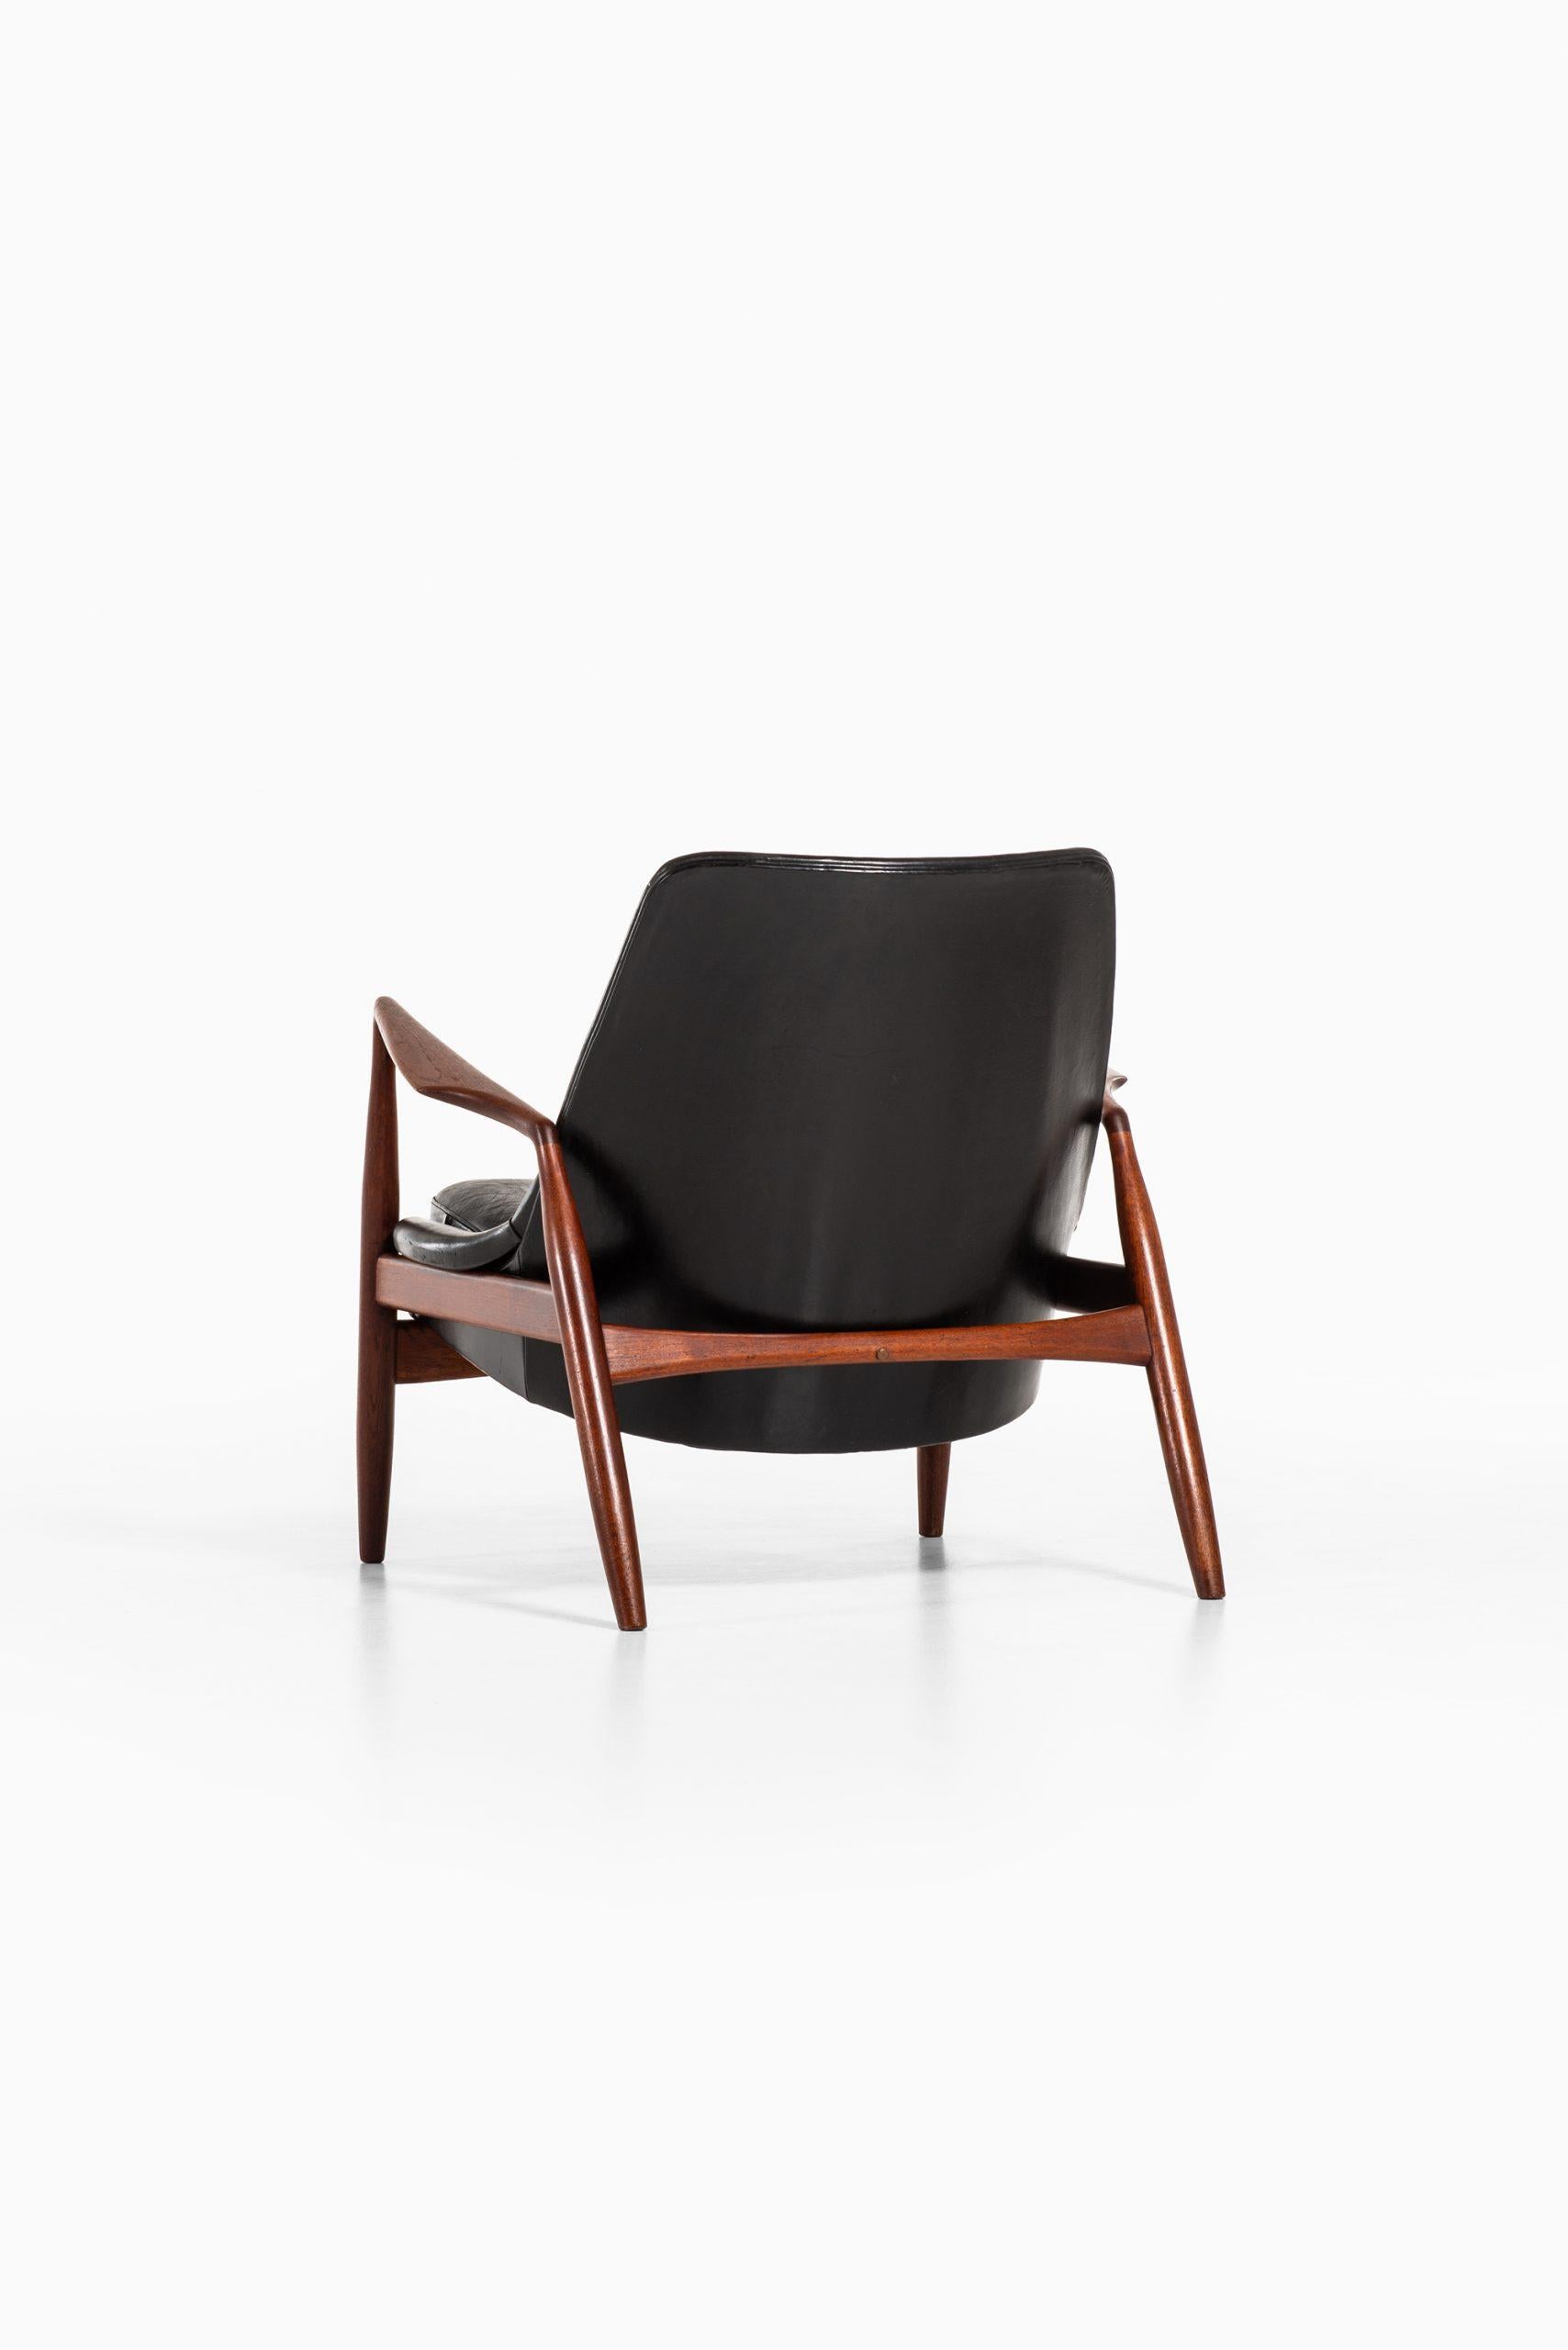 Scandinavian Modern Ib Kofod-Larsen Easy Chair Model Sälen or Seal Produced by OPE in Sweden